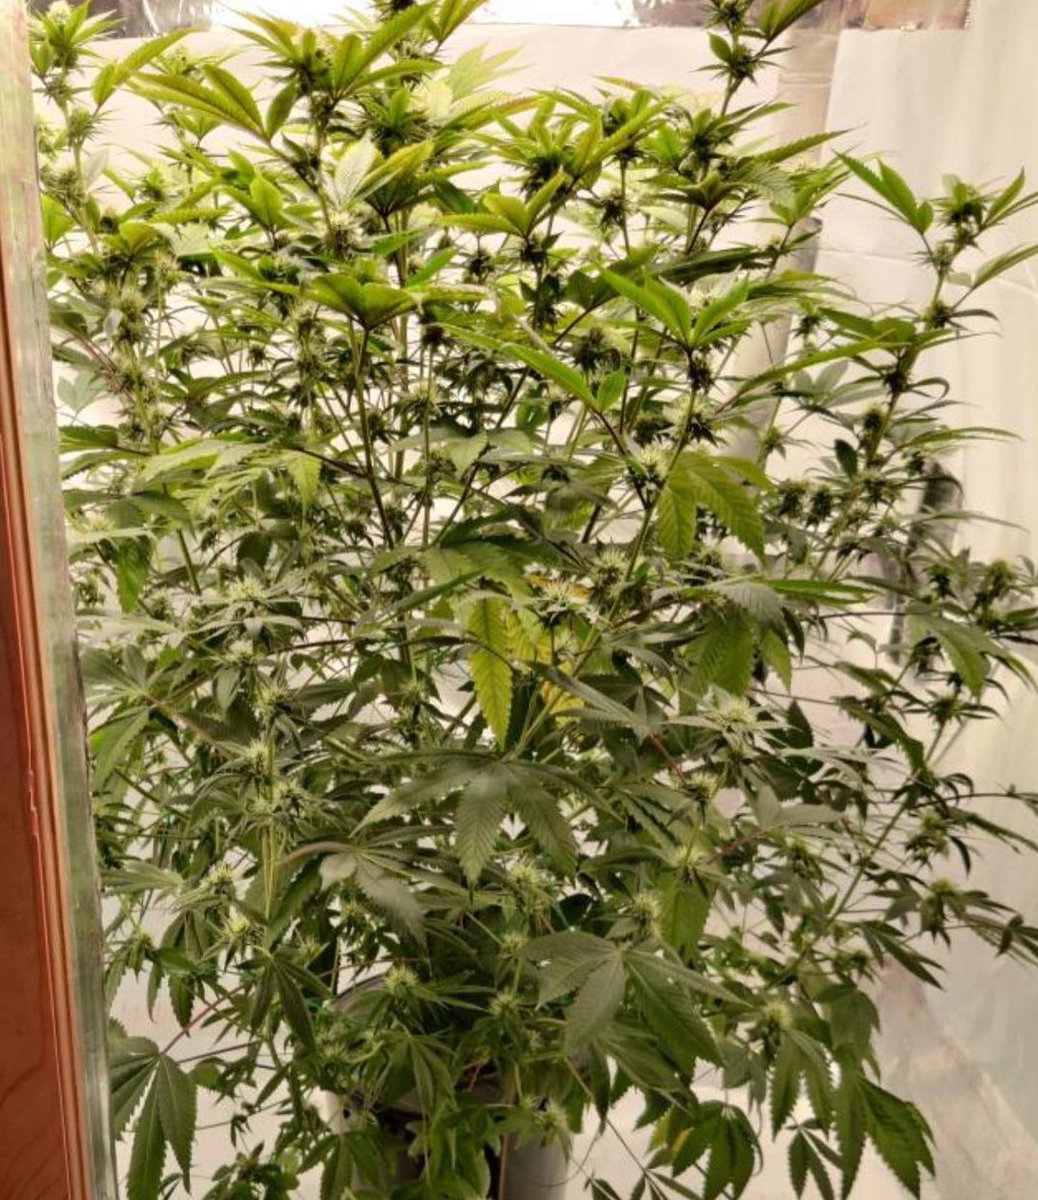 GGBK (bred by Two Dog Seeds) = GG#4🦍🦍🦍🦍 x Bubba Kush: recipes. effects. green #cannabis... #TheFutureIsRegenerative #organic #homegrown #BubbaKush #cannabisculture #cannabiscommunity #weedlife #WeedLikeChange #BeTheChange #420 #710 #marijuana #mmj #cannafam #GMOfree #GrowLove